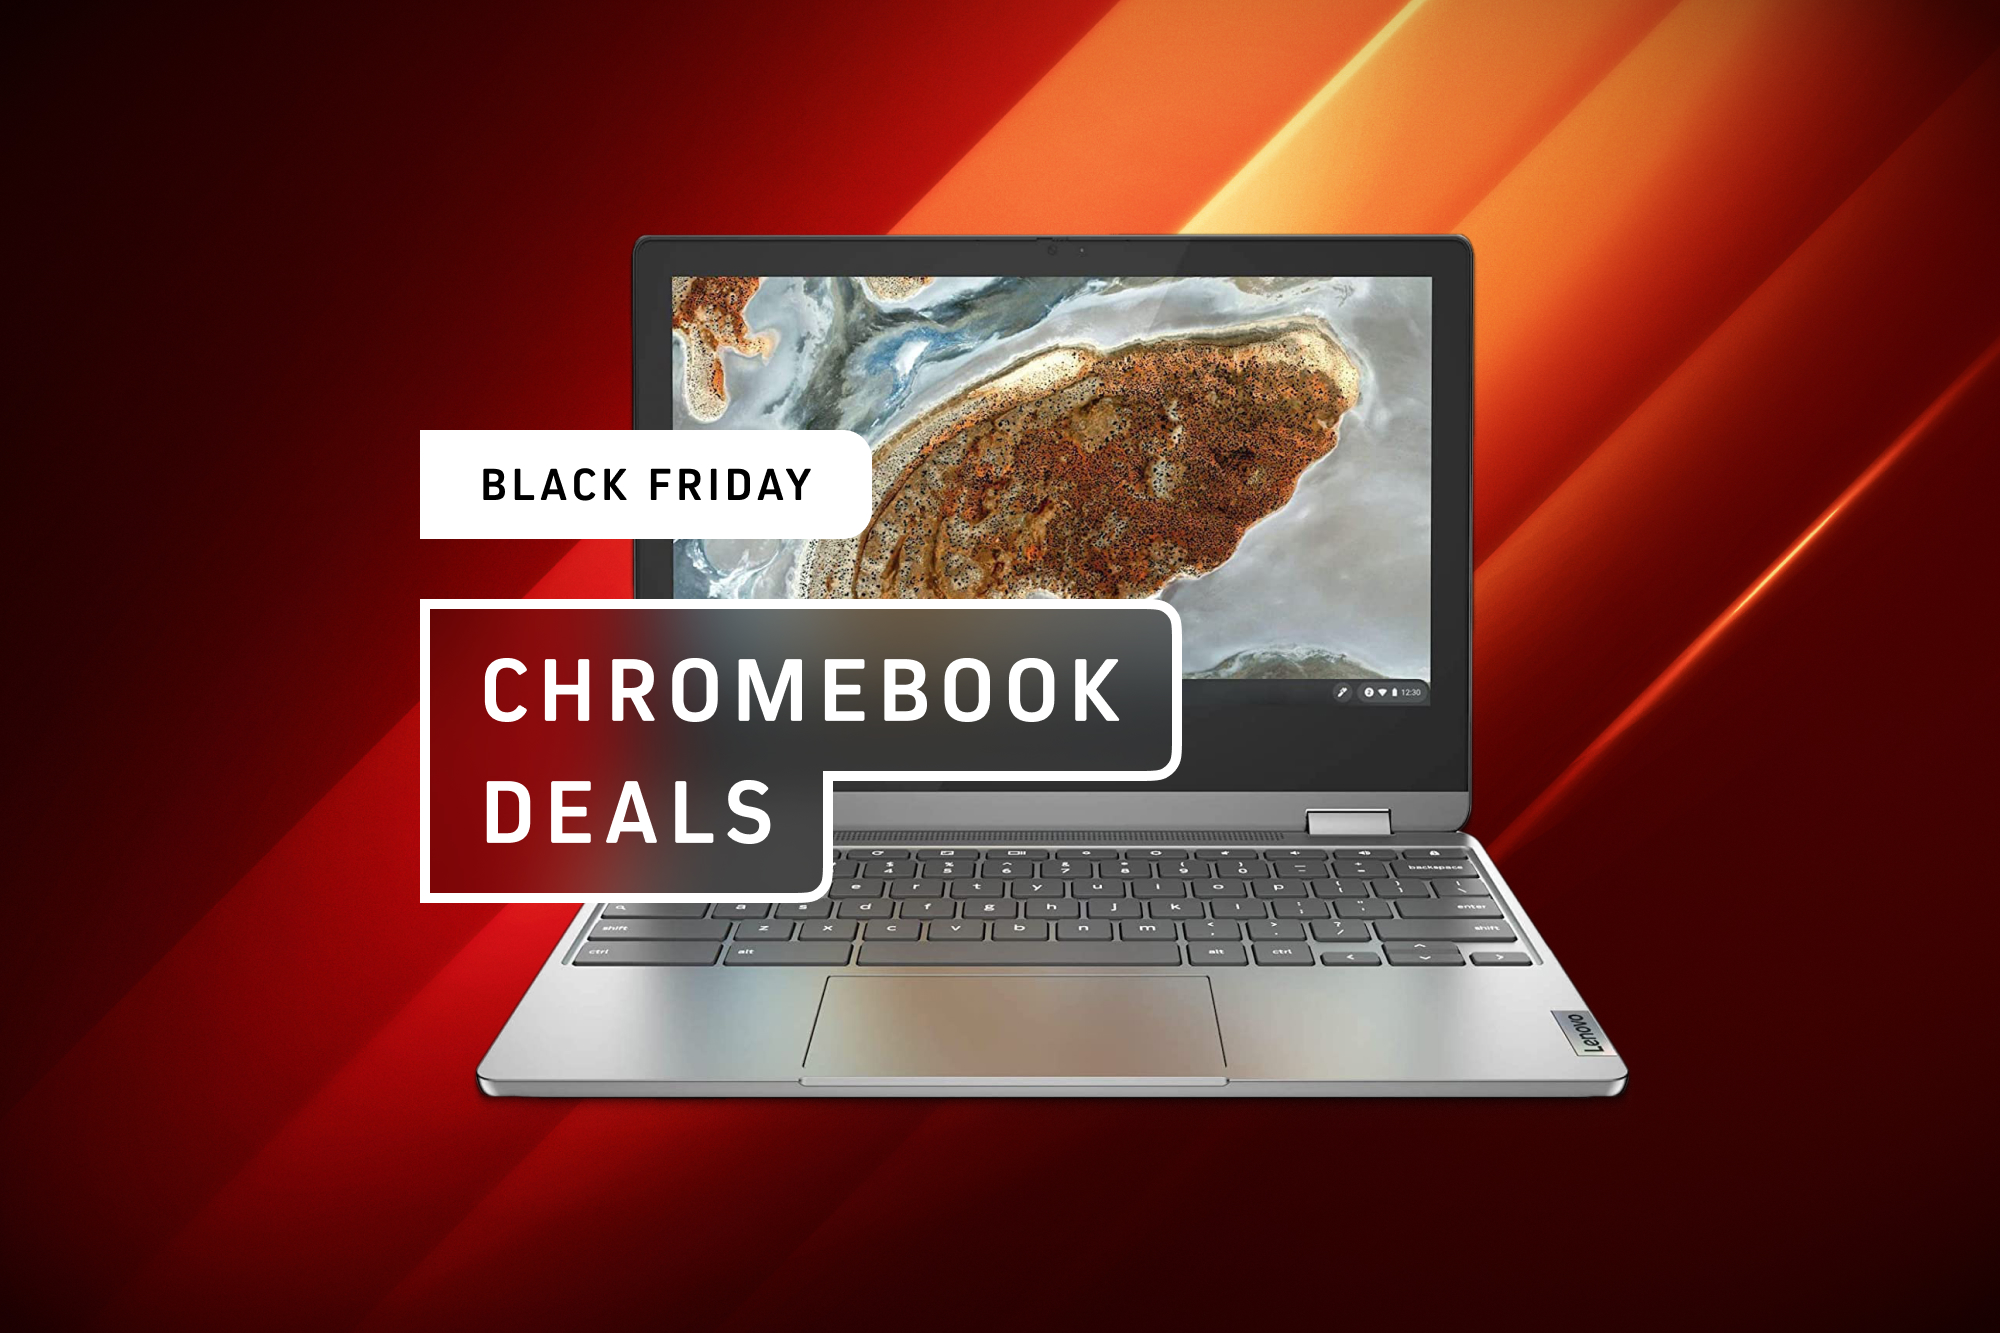 Huis Laag Van Best Black Friday Chromebook Deals: Get a laptop for $79 | Digital Trends